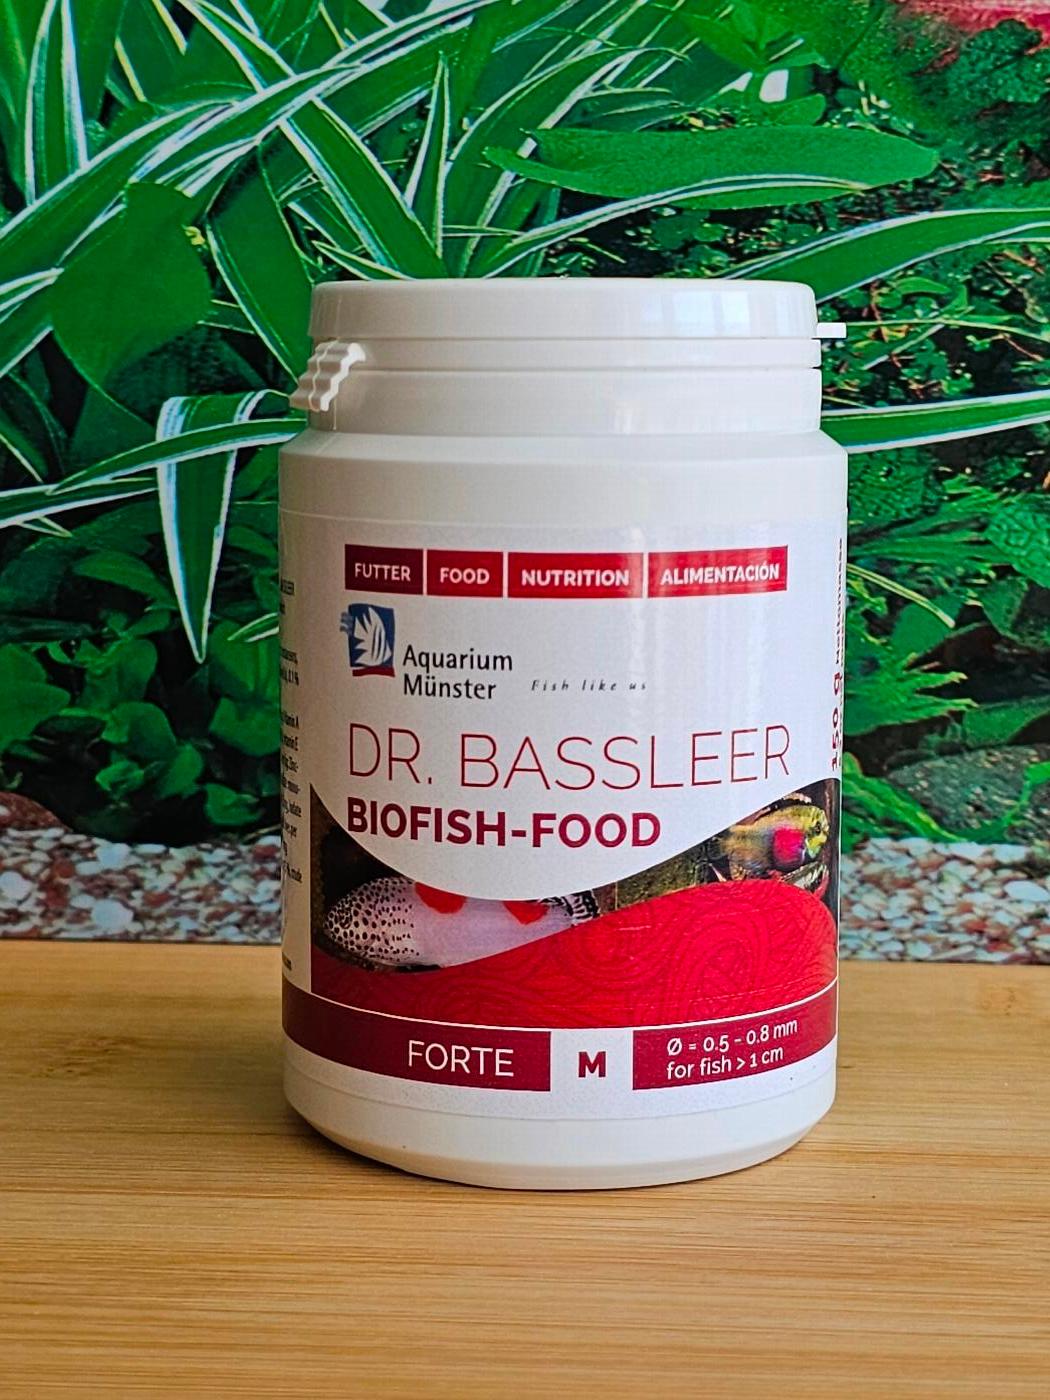 Dr. Bassleer Biofish-Food FORTE M